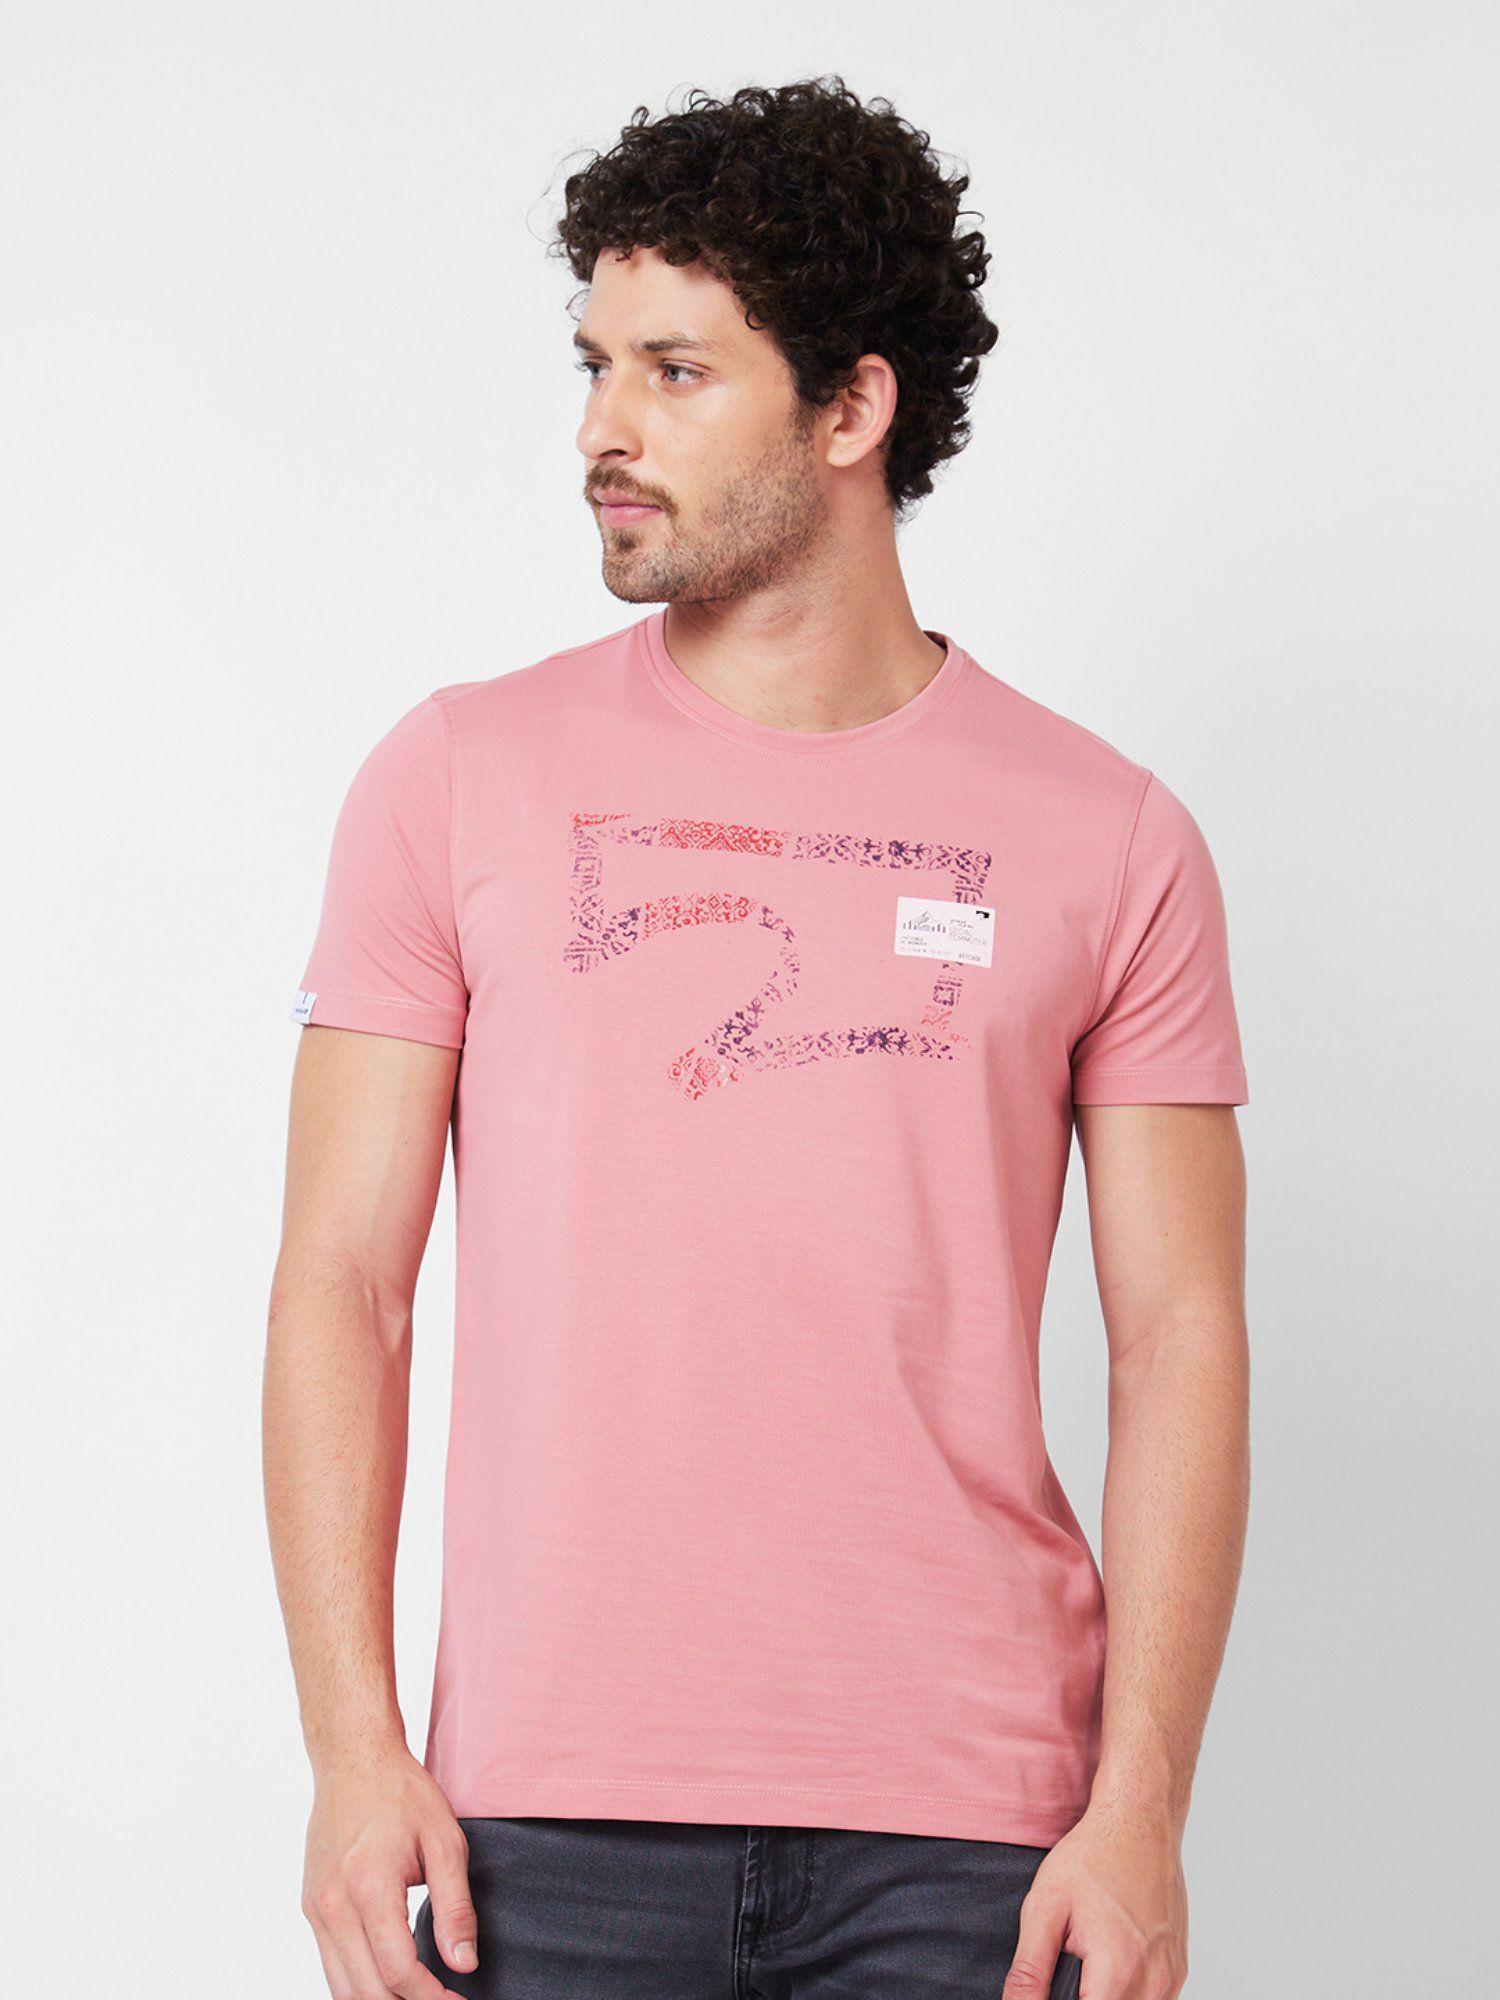 round neck half sleeves pink t-shirt for men